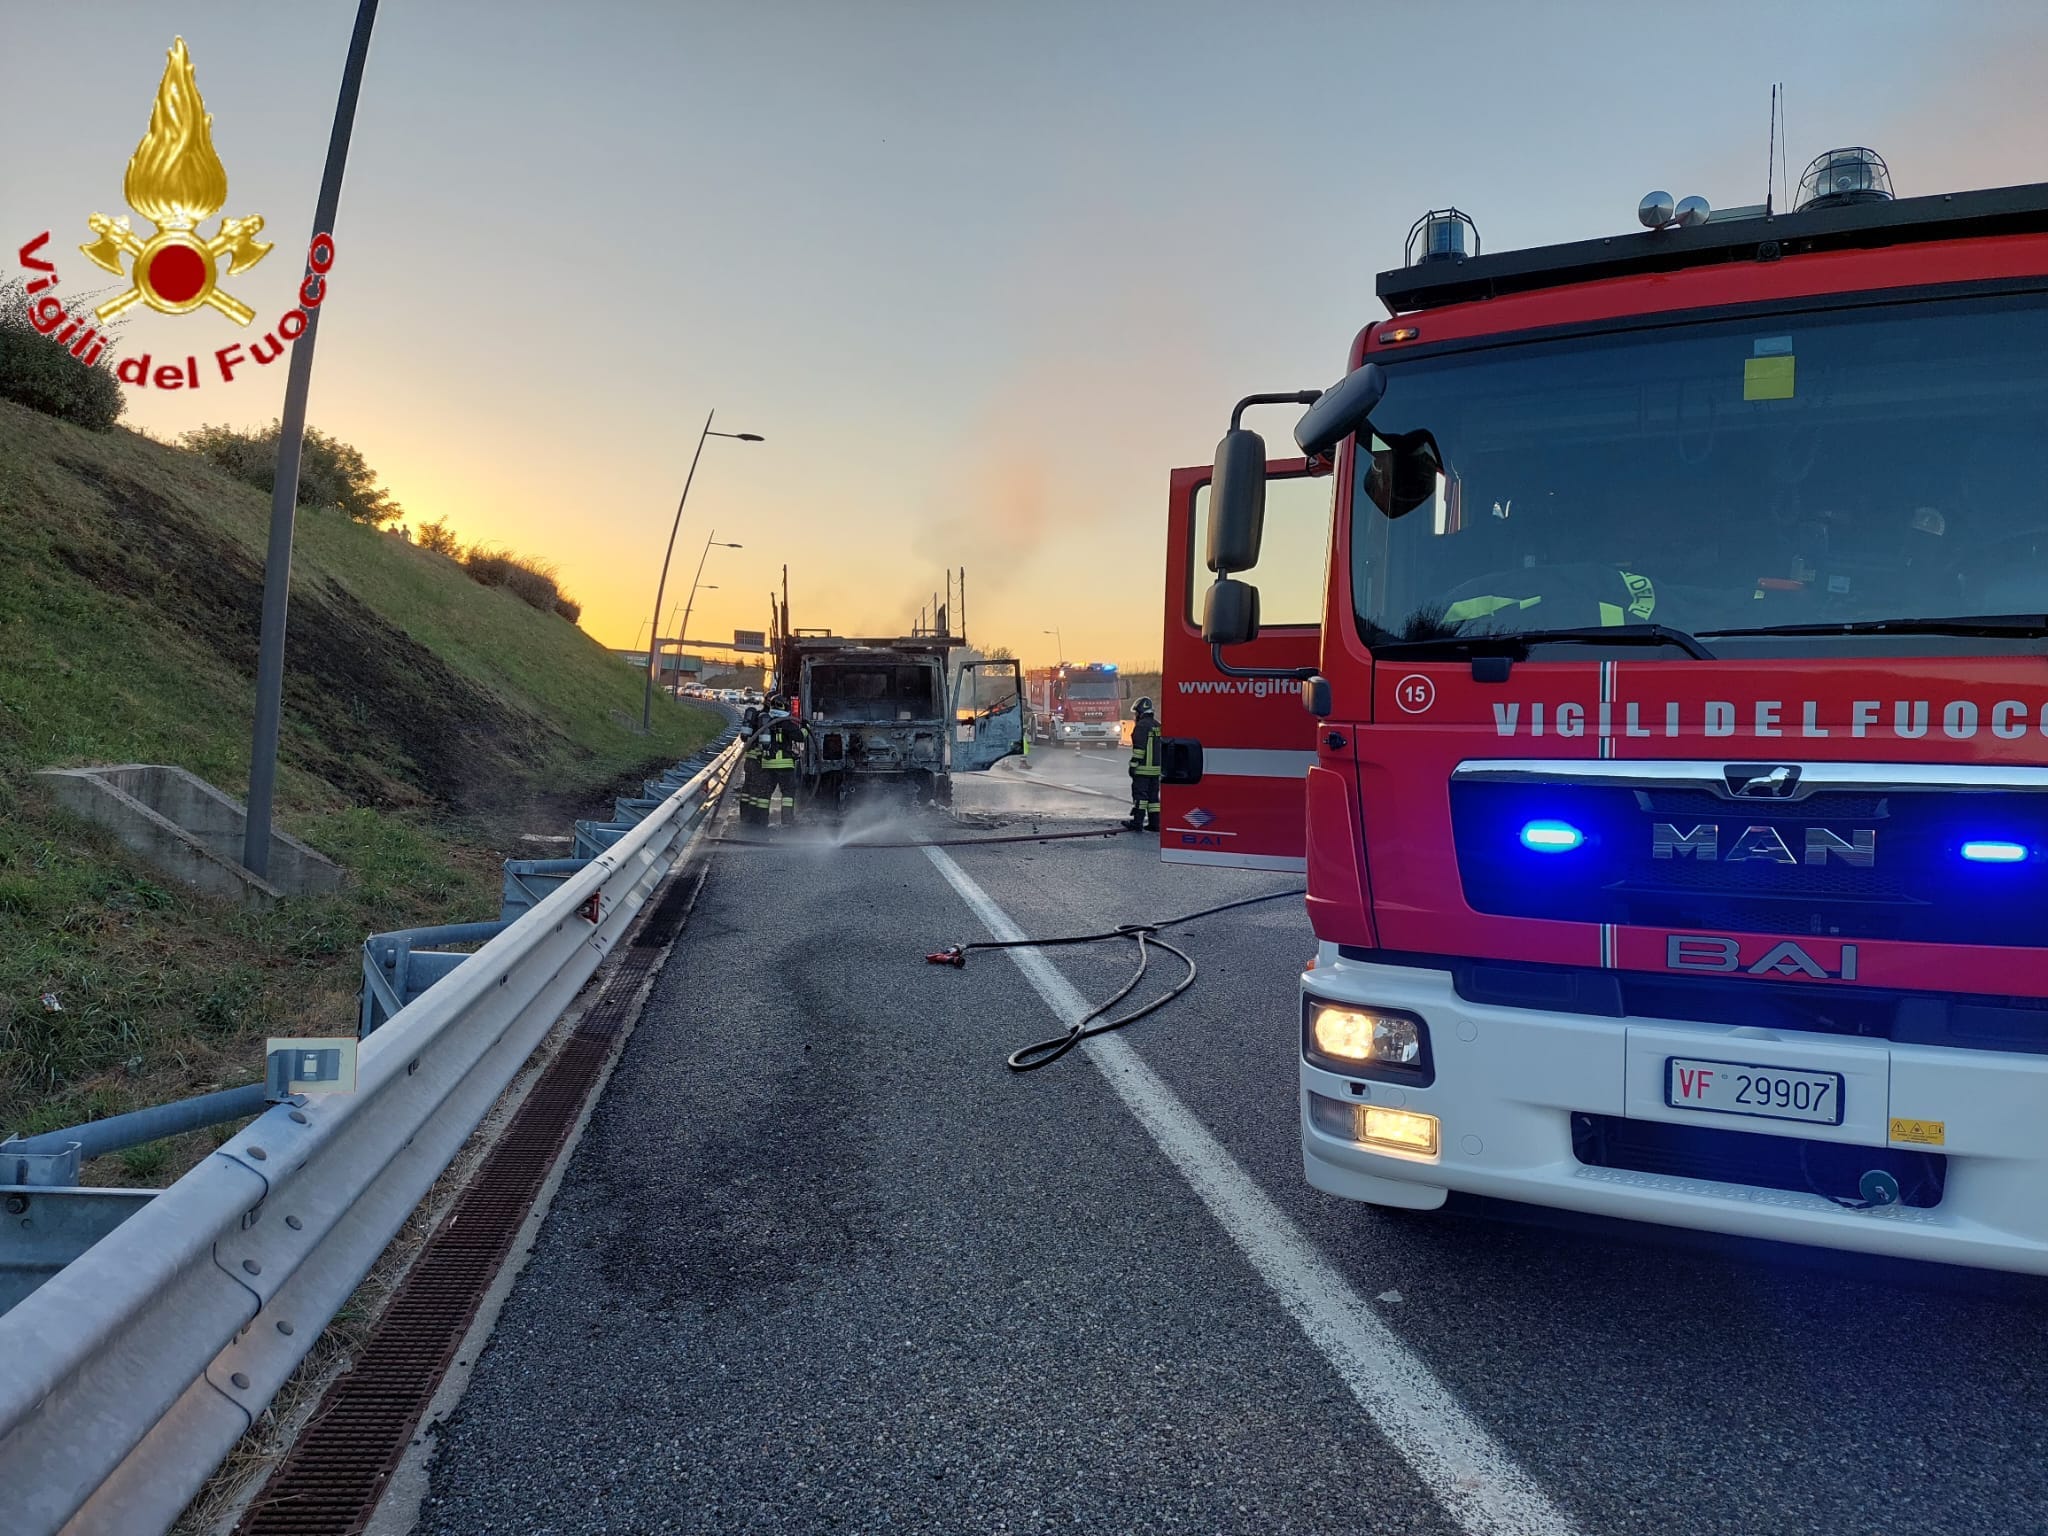 Pedemontana Lentate sul Seveso incendio furgone vigili del fuoco pompieri